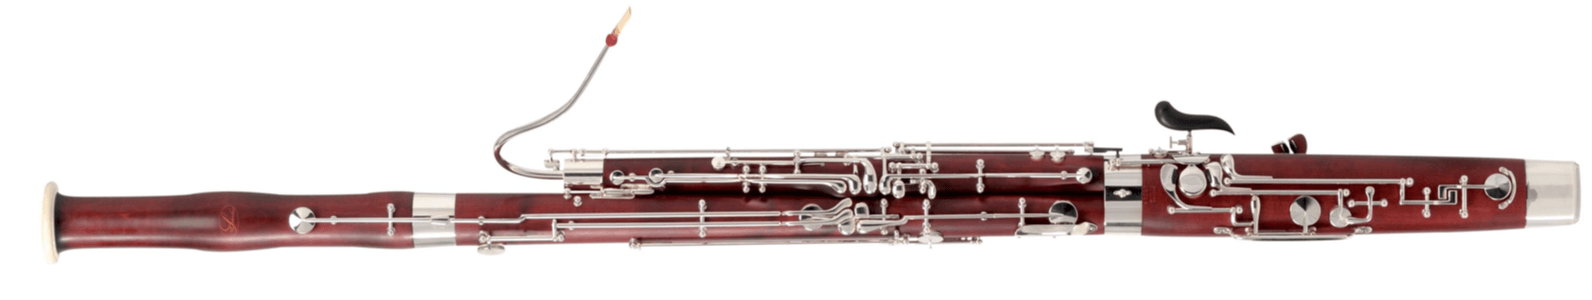 W. Schreiber S91 Professional Bassoon - MRW Artisan Instruments